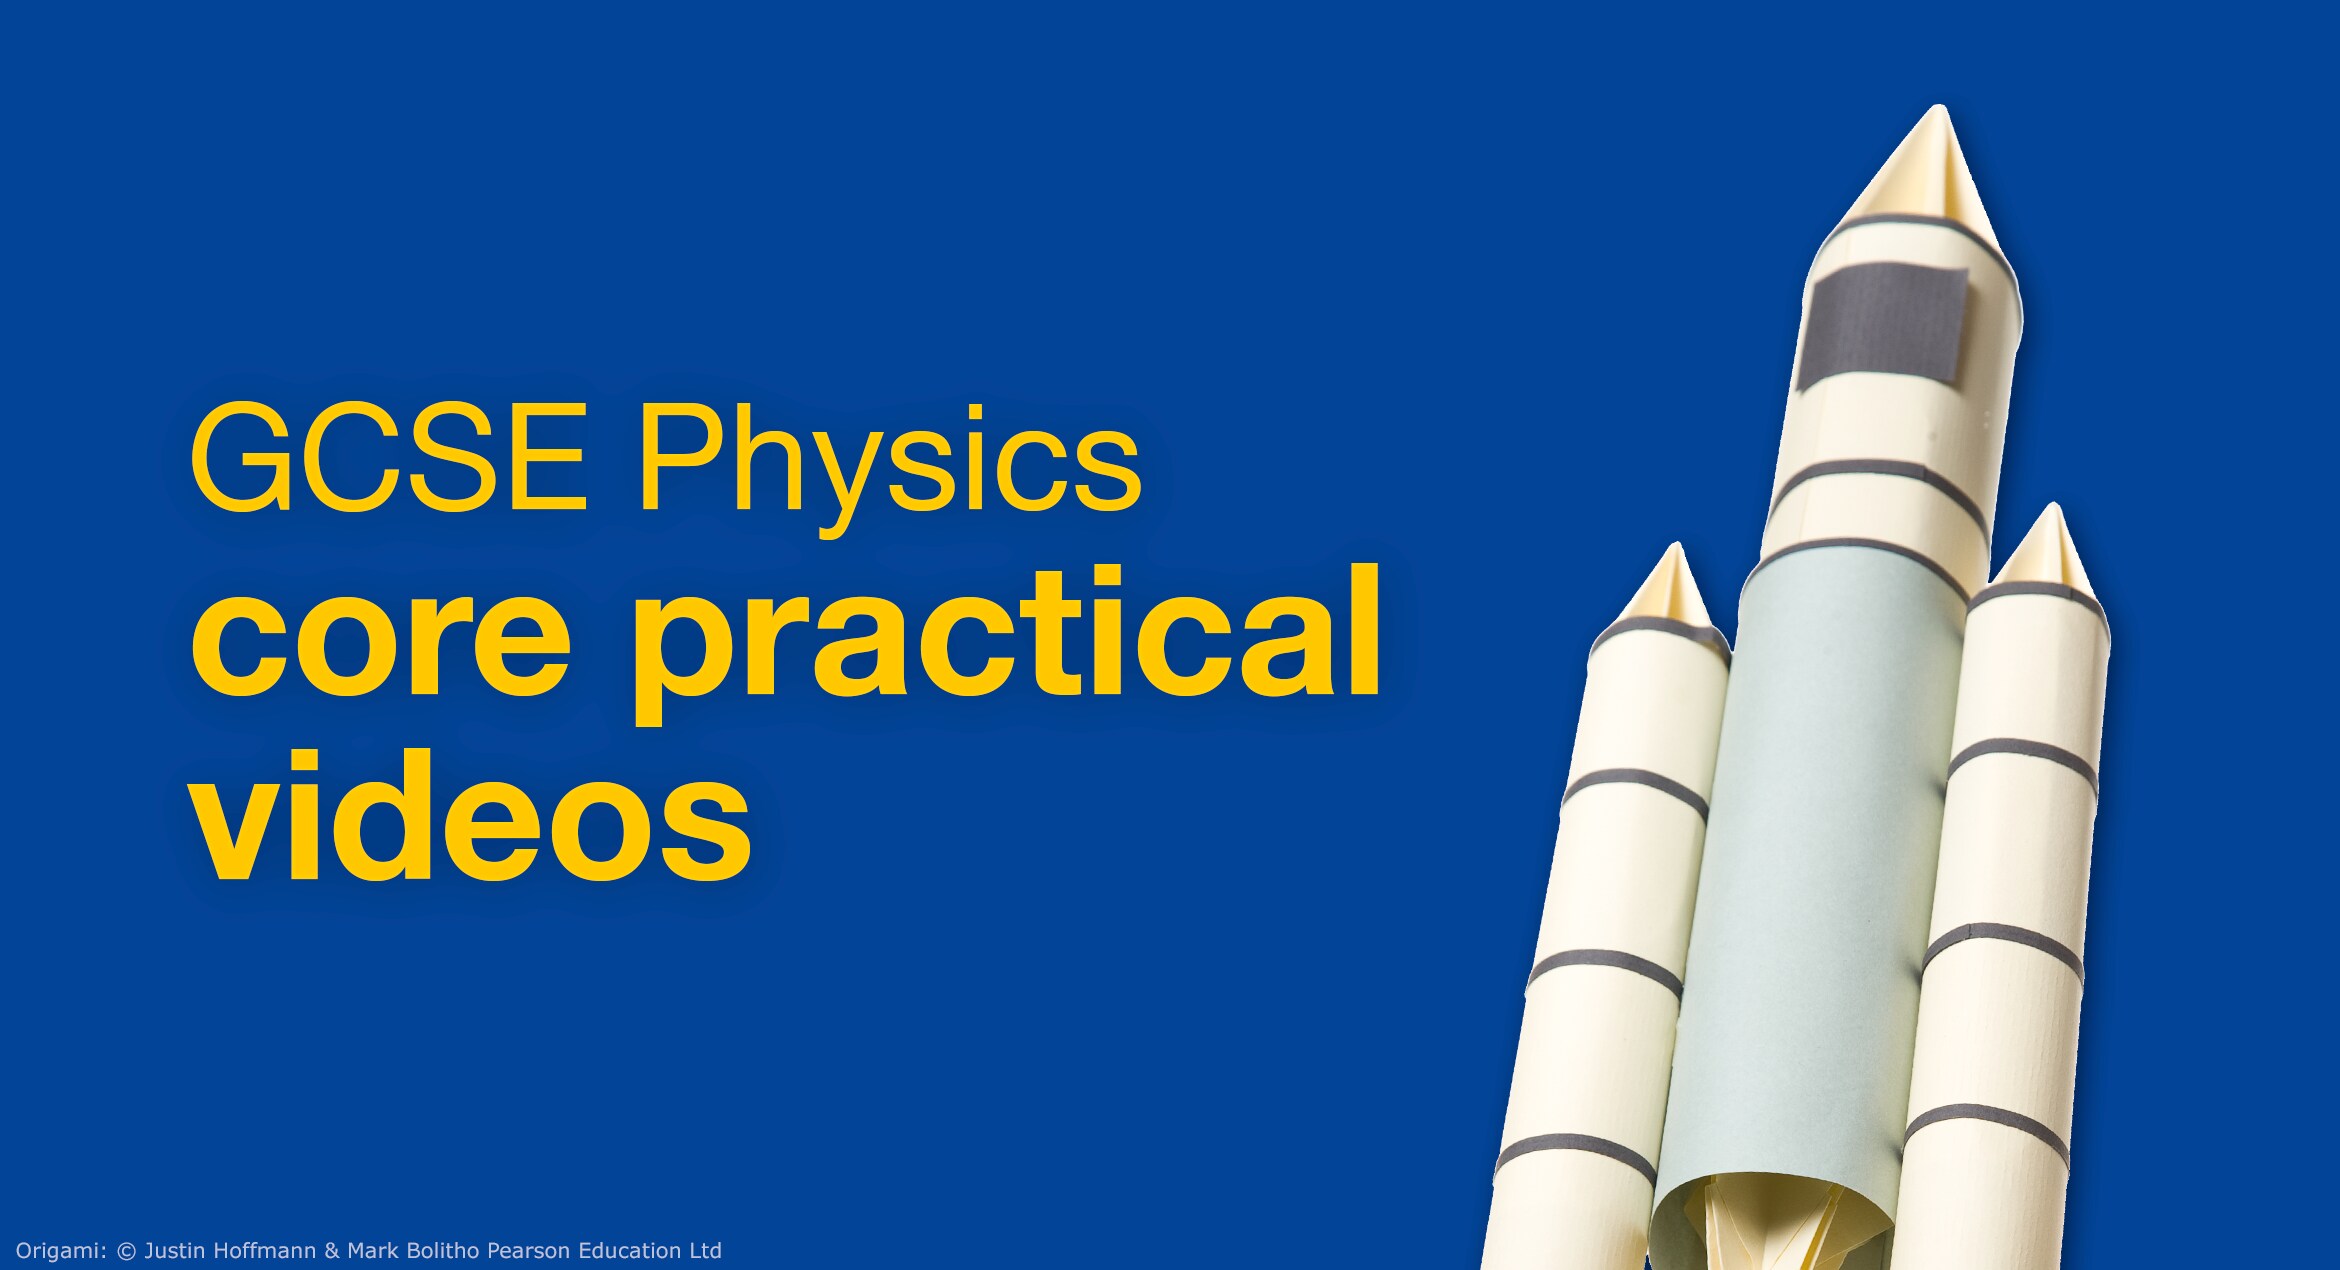 GCSE Physics core practical videos